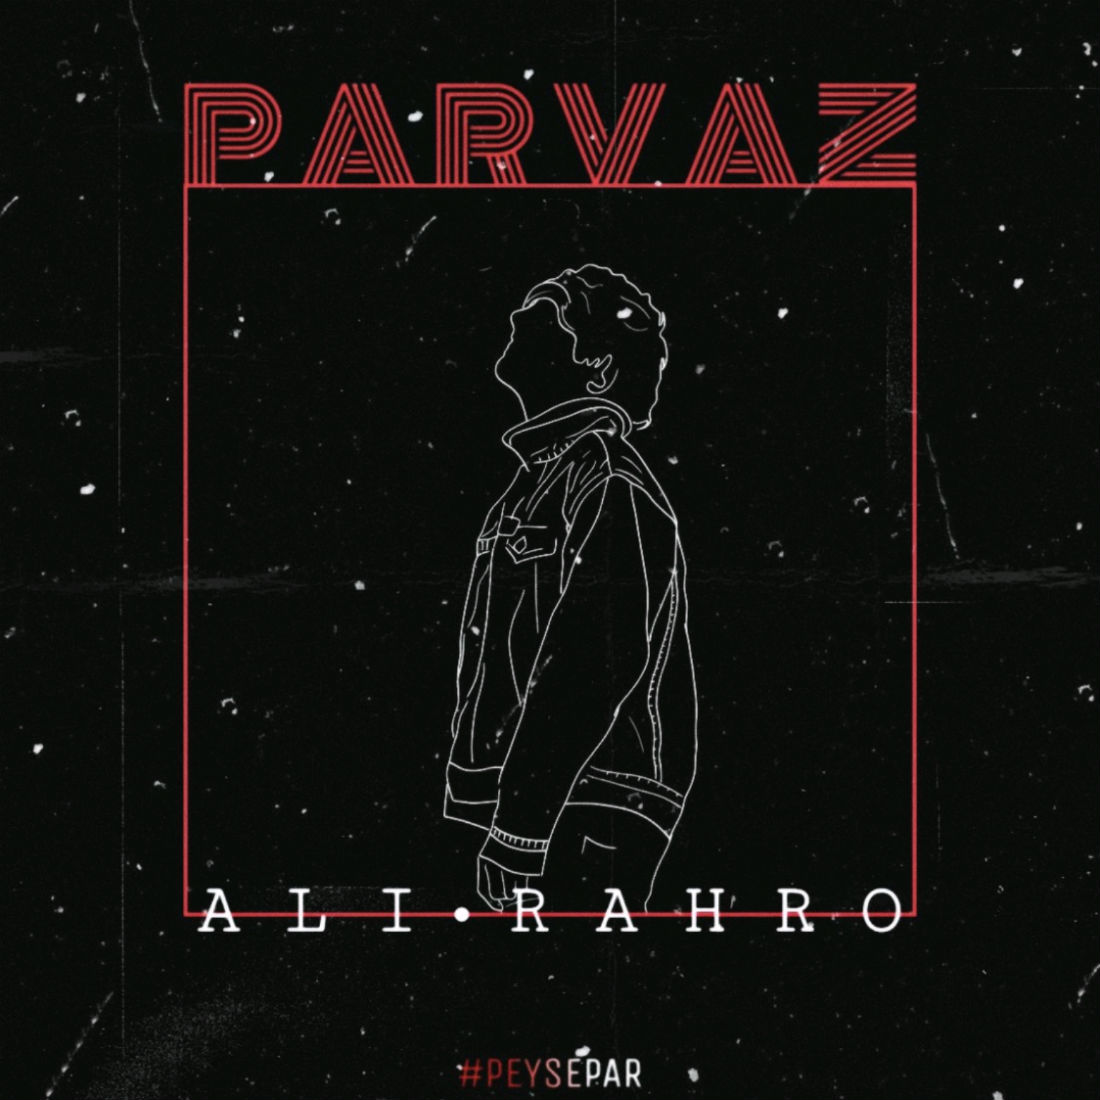 Ali Rahro - Parvaz